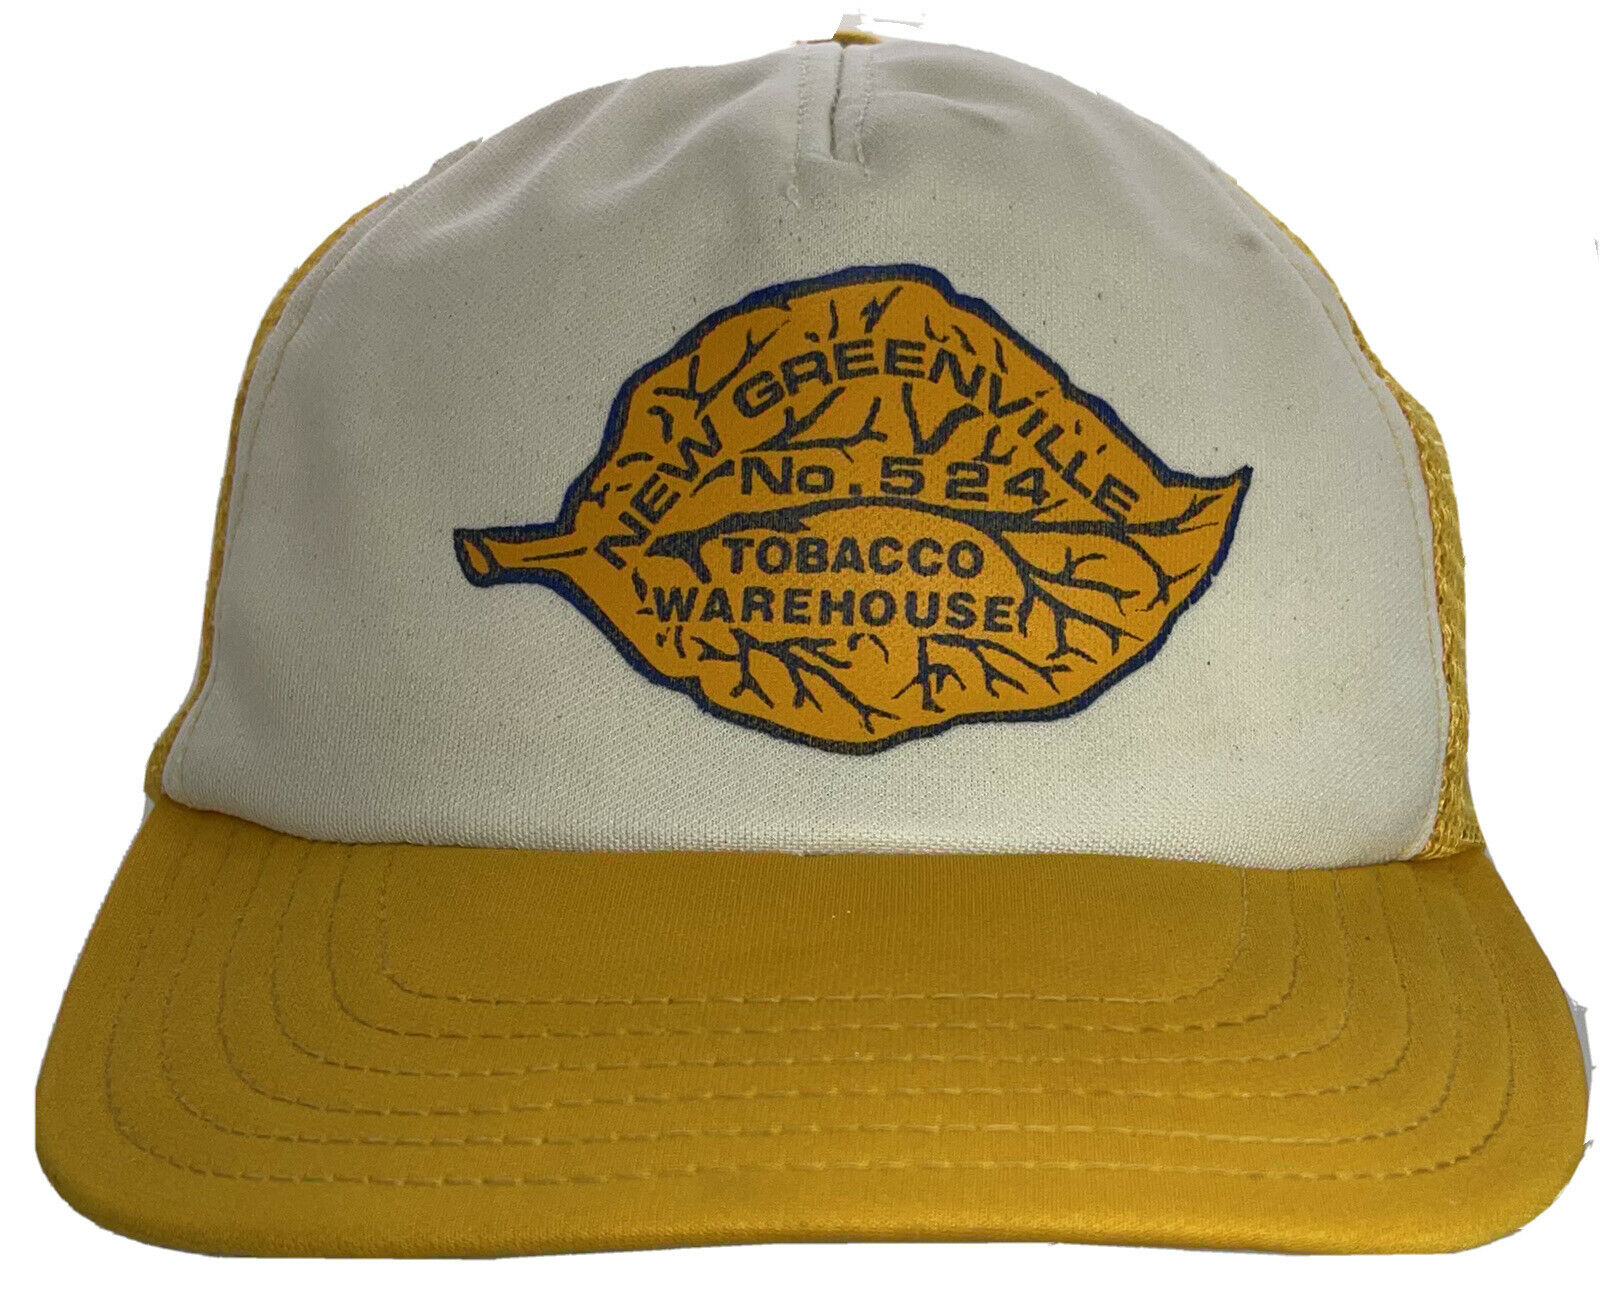 Rare Vintage 1980’s New Greenville Nc Tobacco Warehouse 524 Snapback Trucker Hat